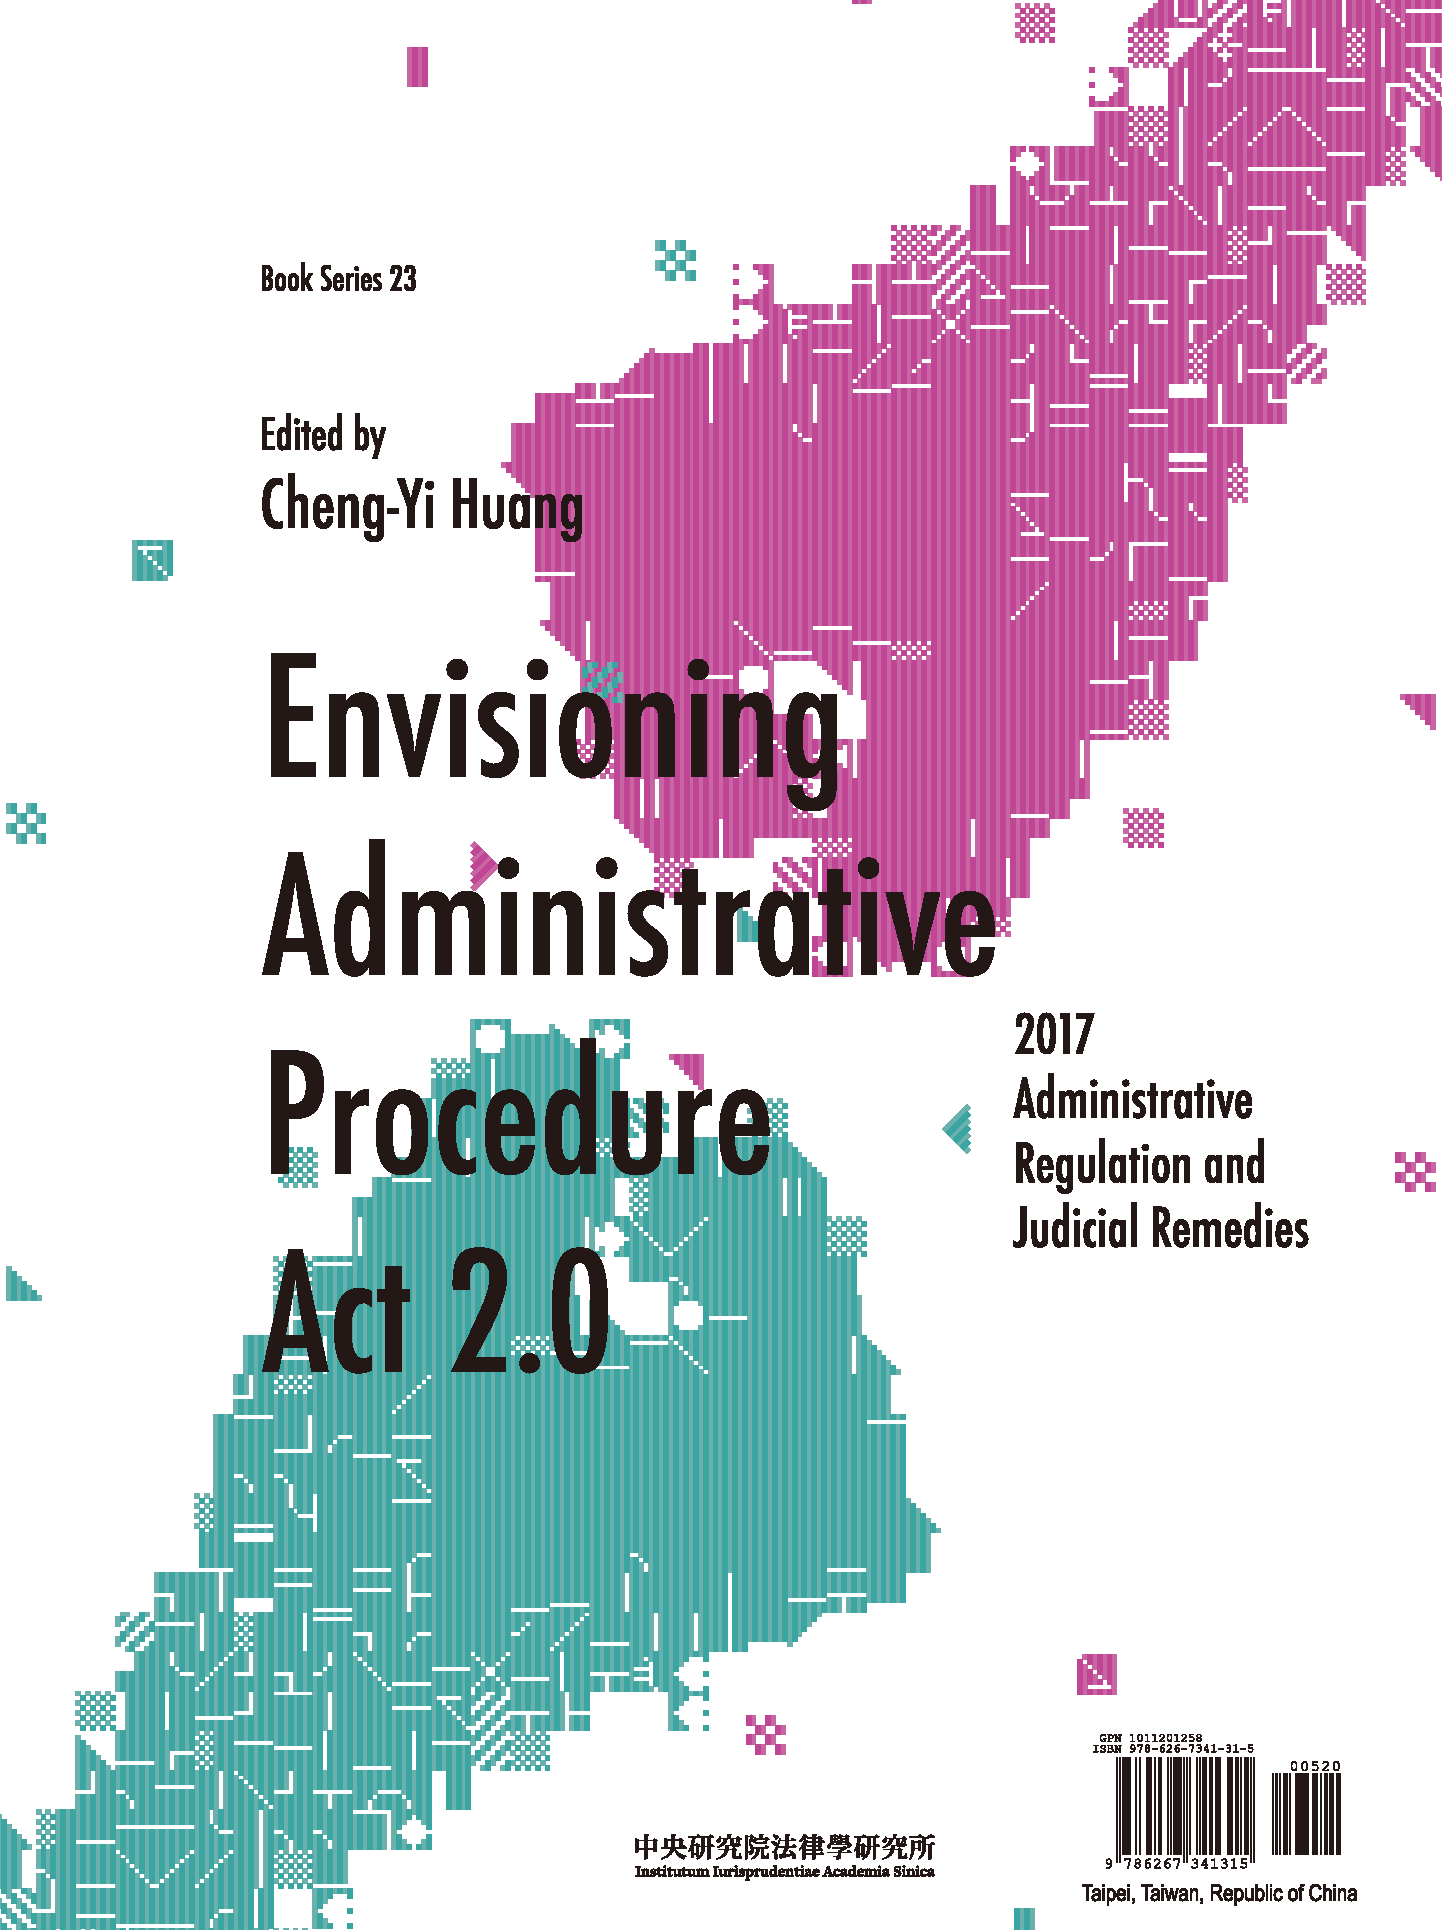 2017 Administrative Regulation and Judicial Remedies: Envisioning Administrative Procedure 2.0